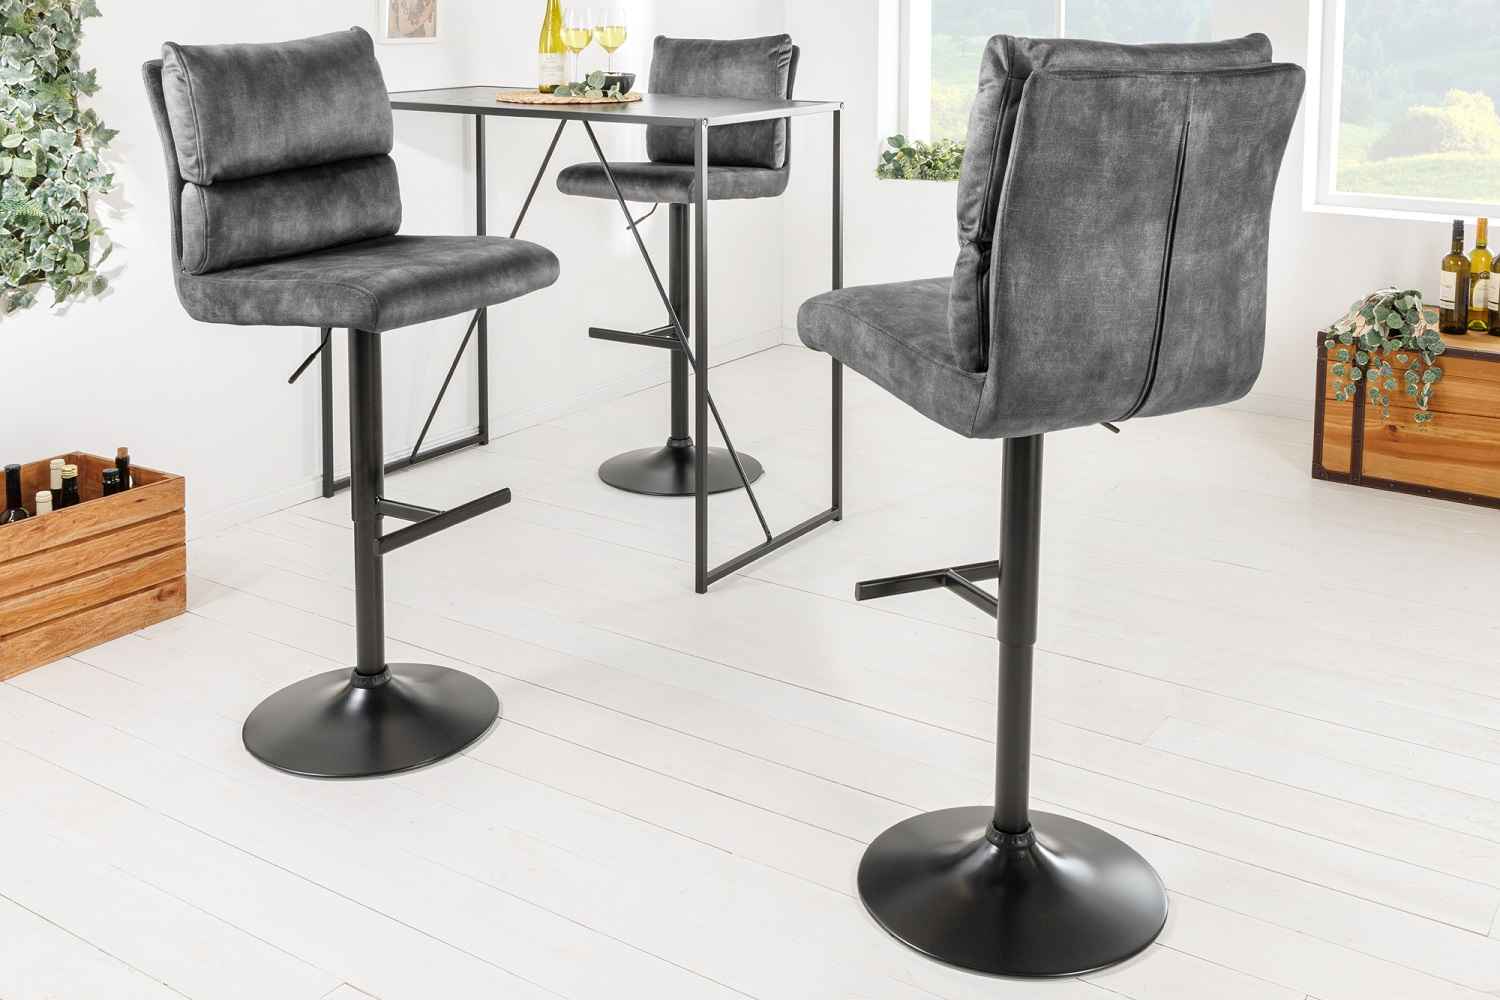 Designová barová otočná židle Frank tmavě šedý samet